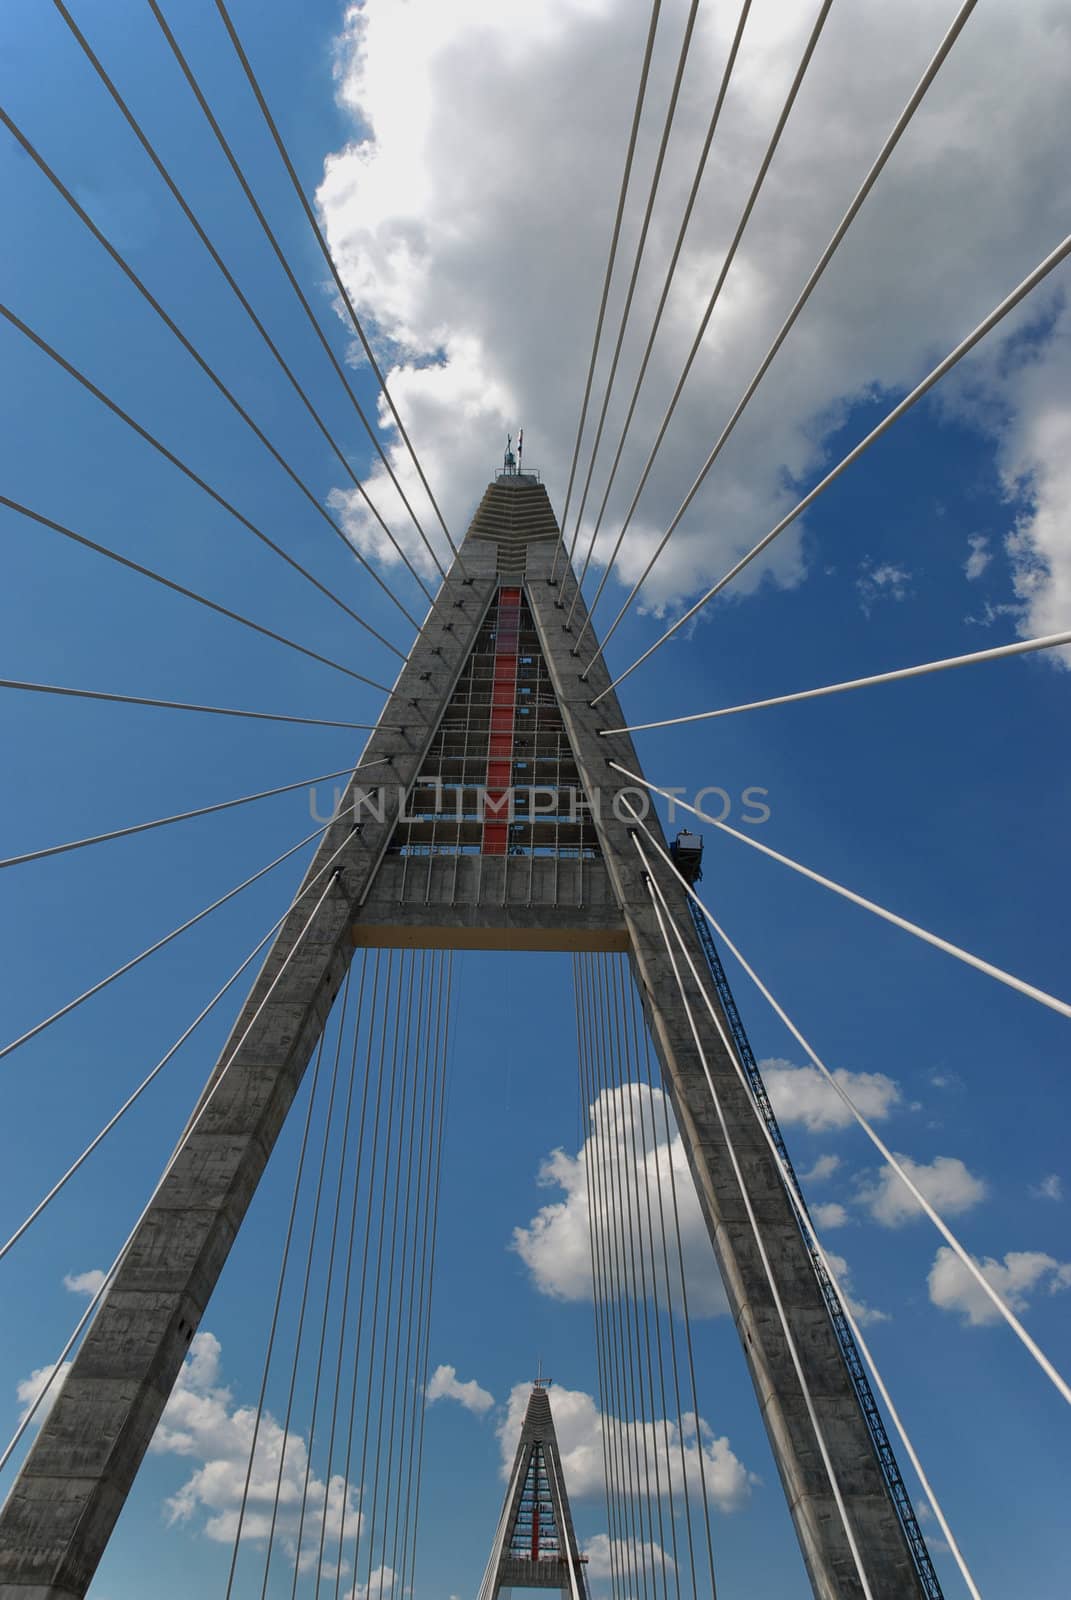 Megyeri bridge in hungary (almost Steven Colbert bridge)